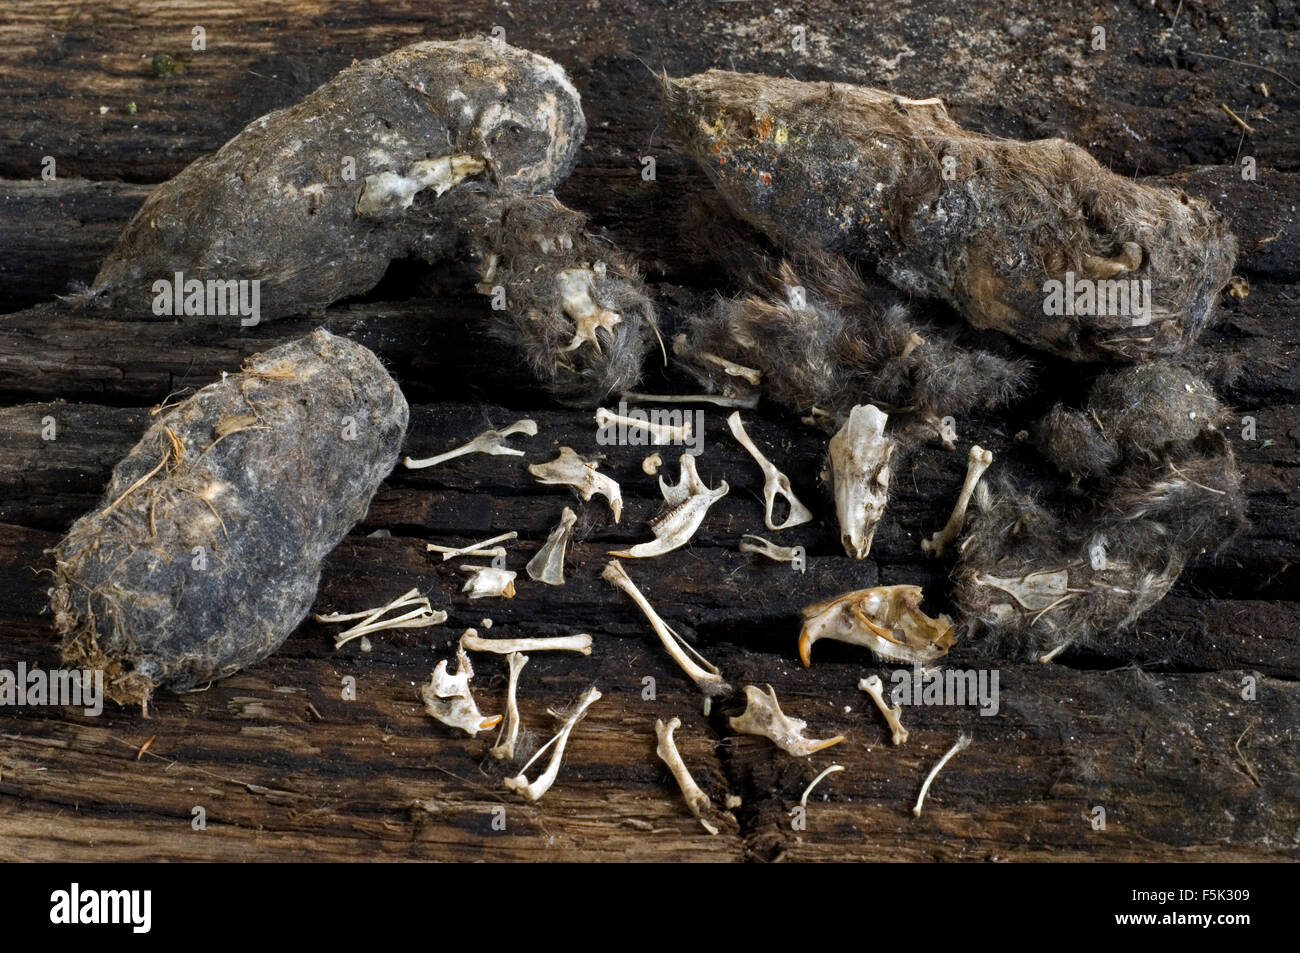 Contents of regurgitated Barn owl pellets (Tyto alba) showing bones and skulls of mice Stock Photo